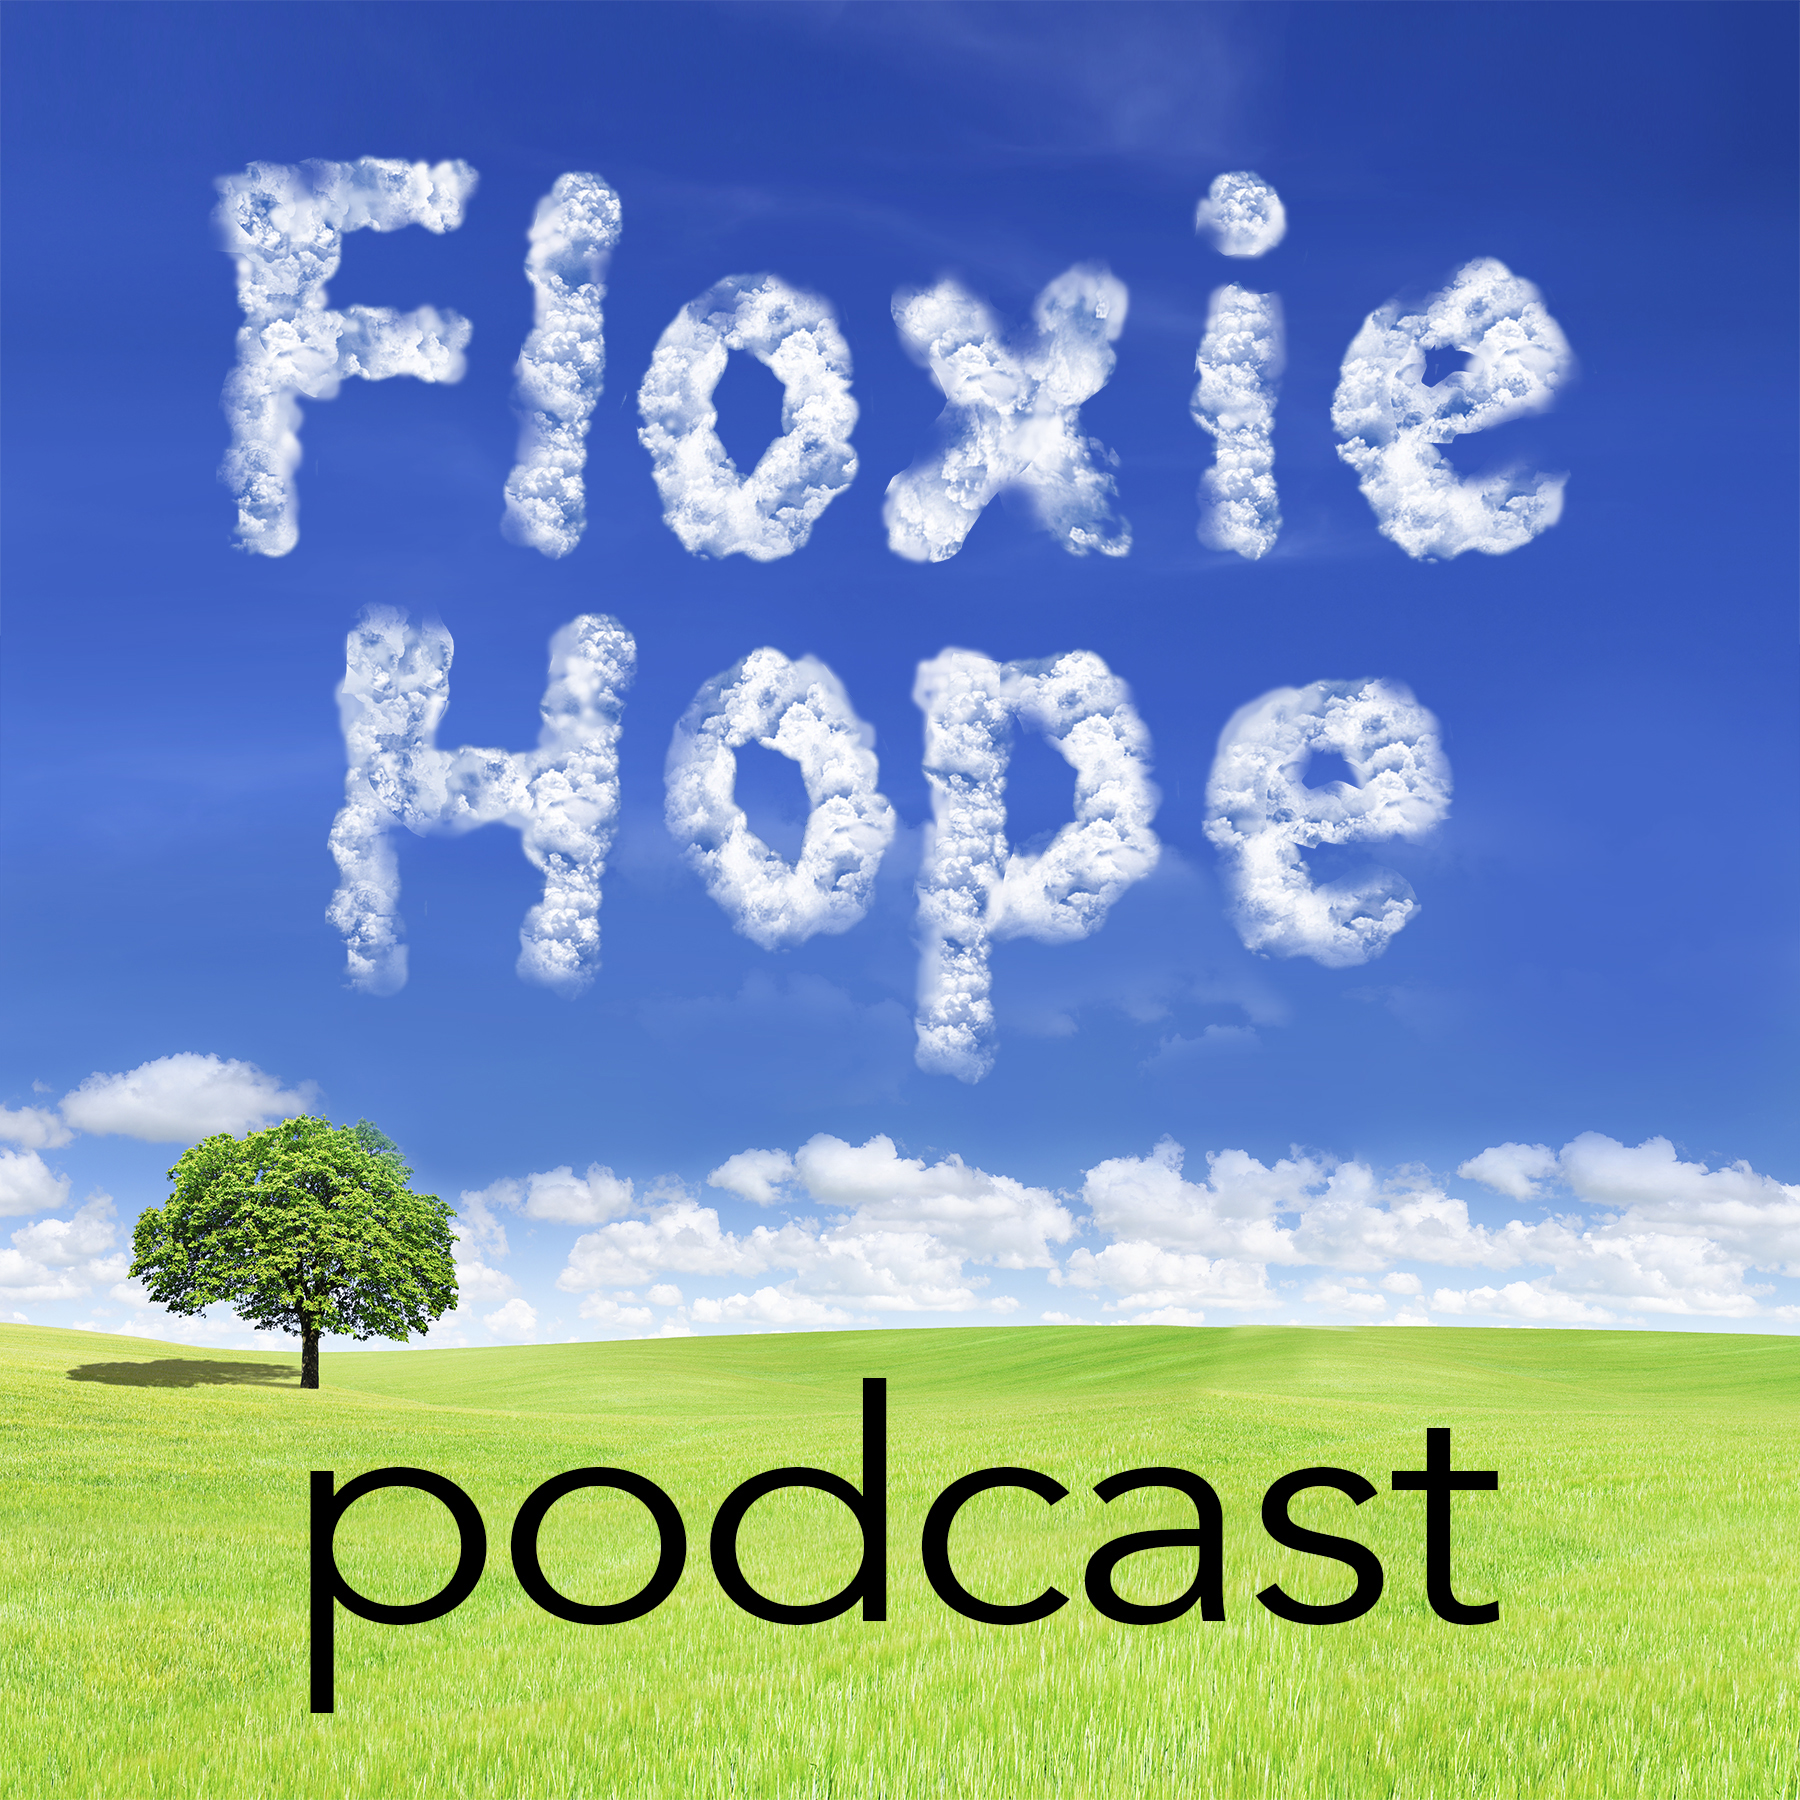 Floxie.Hope.Podcast.1800.72.dpi